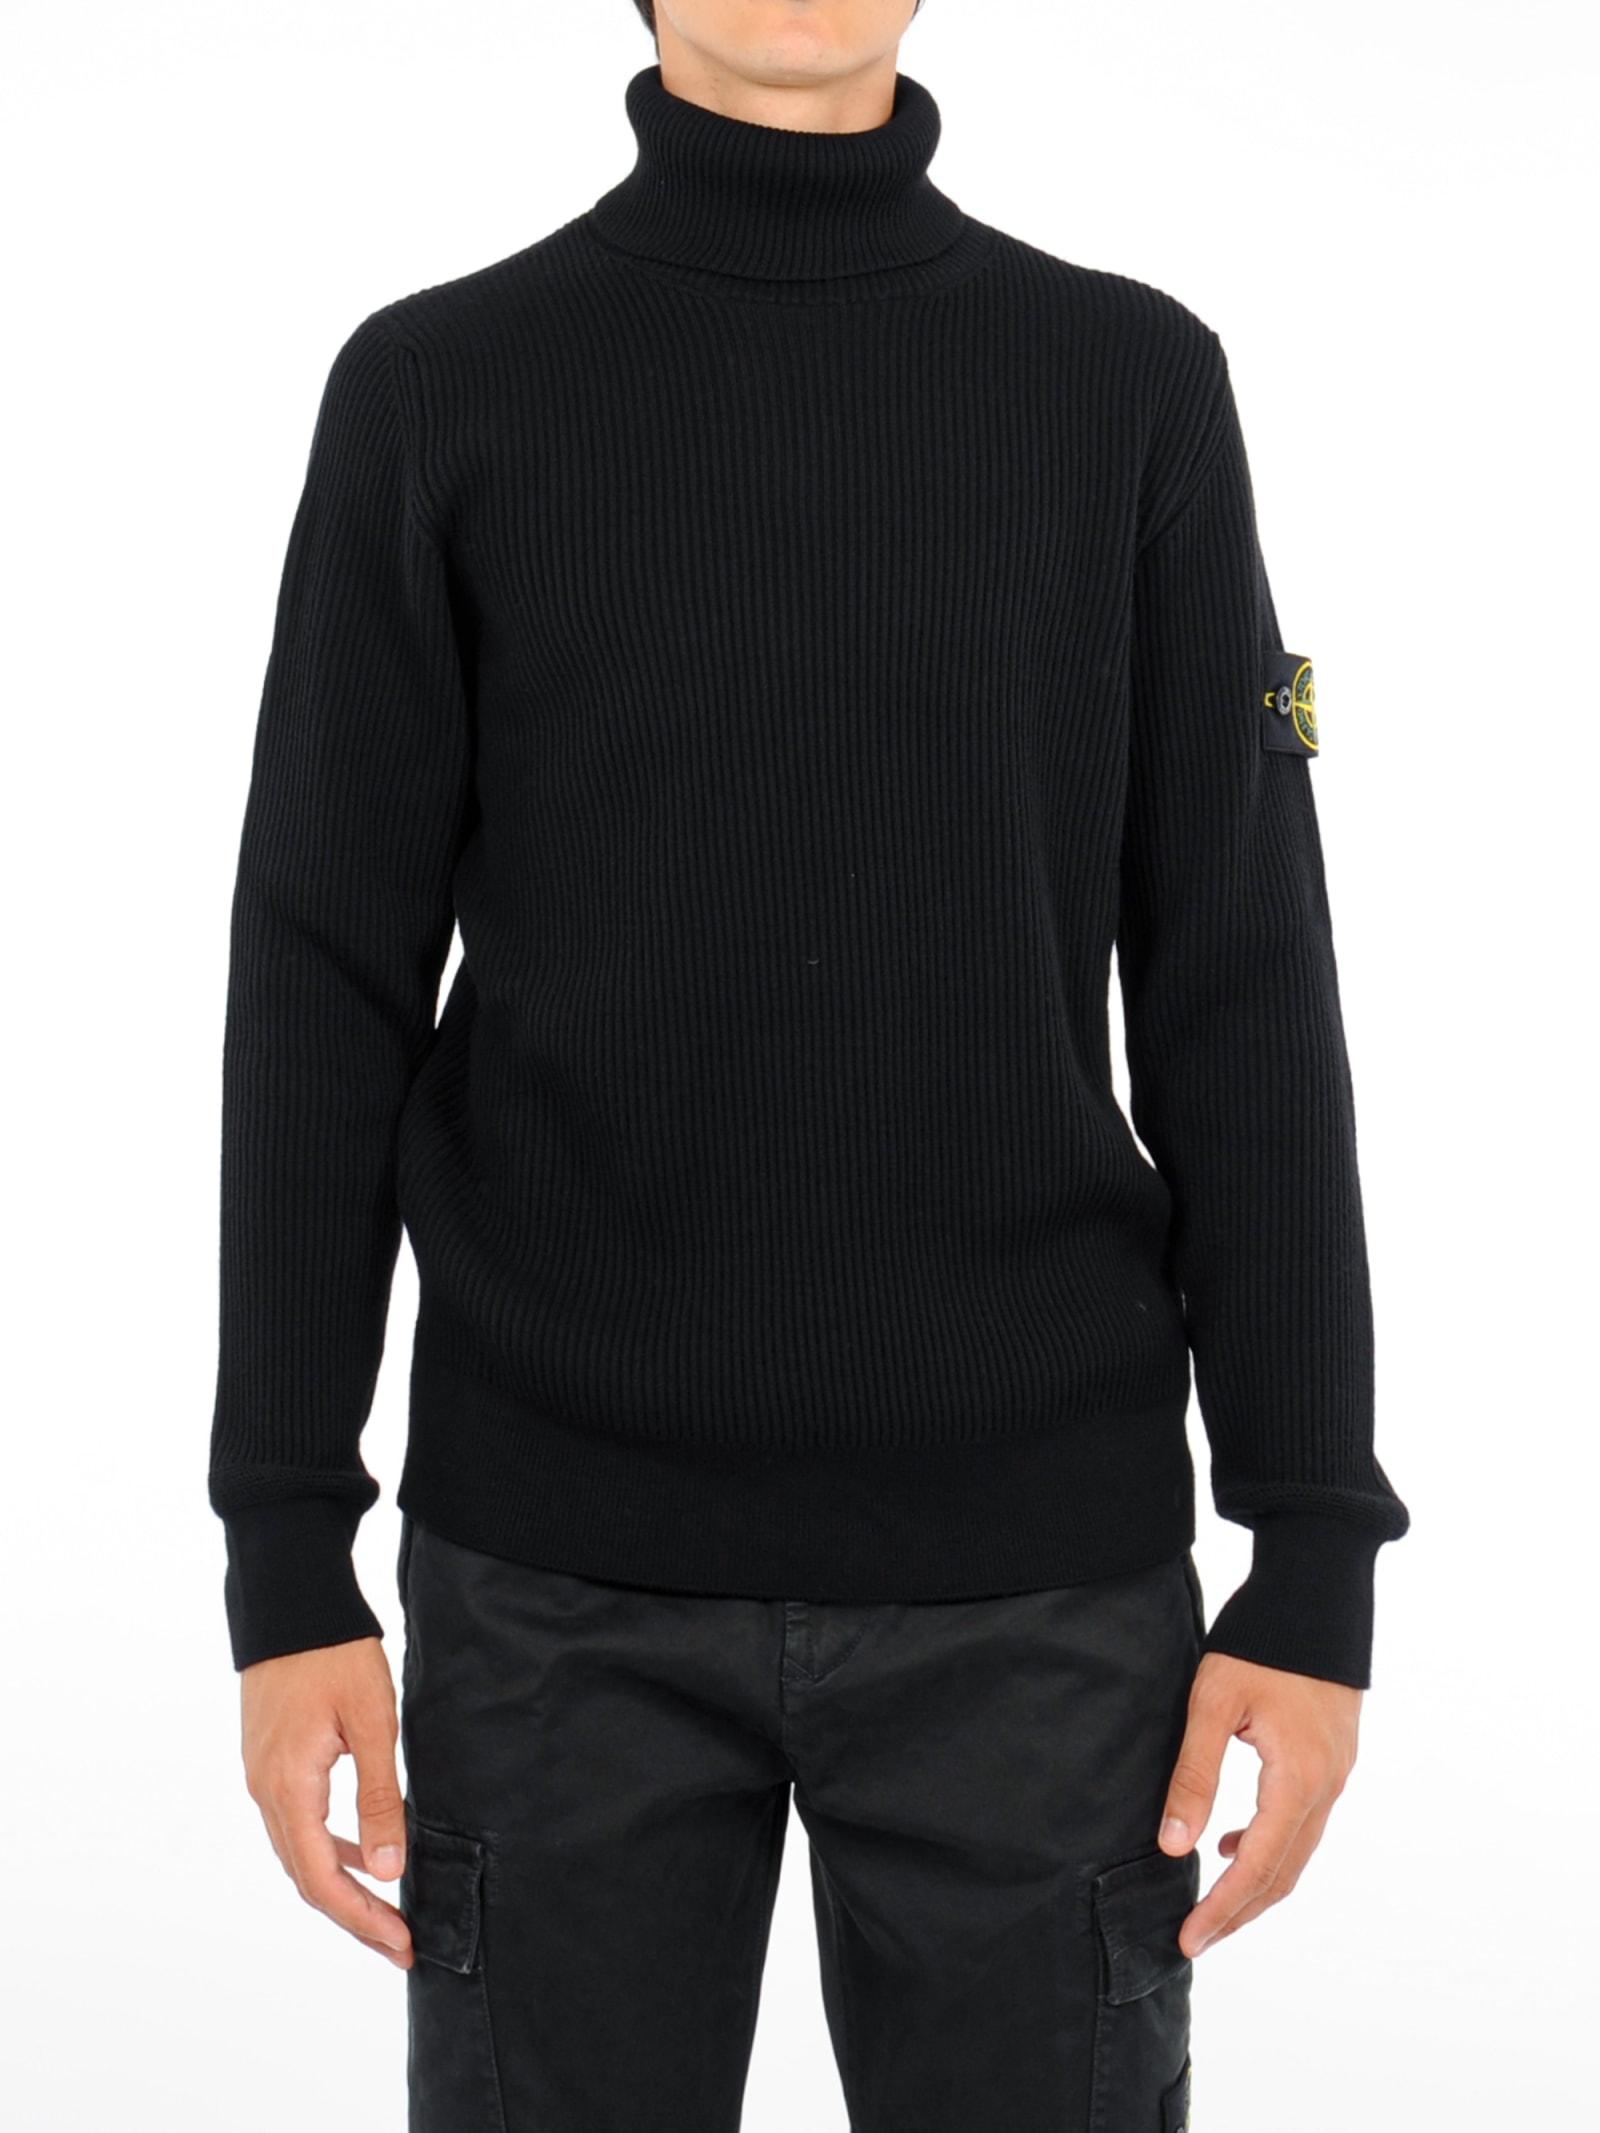 Stone Island Turtle Neck Knit Sweater in Black for Men | Lyst